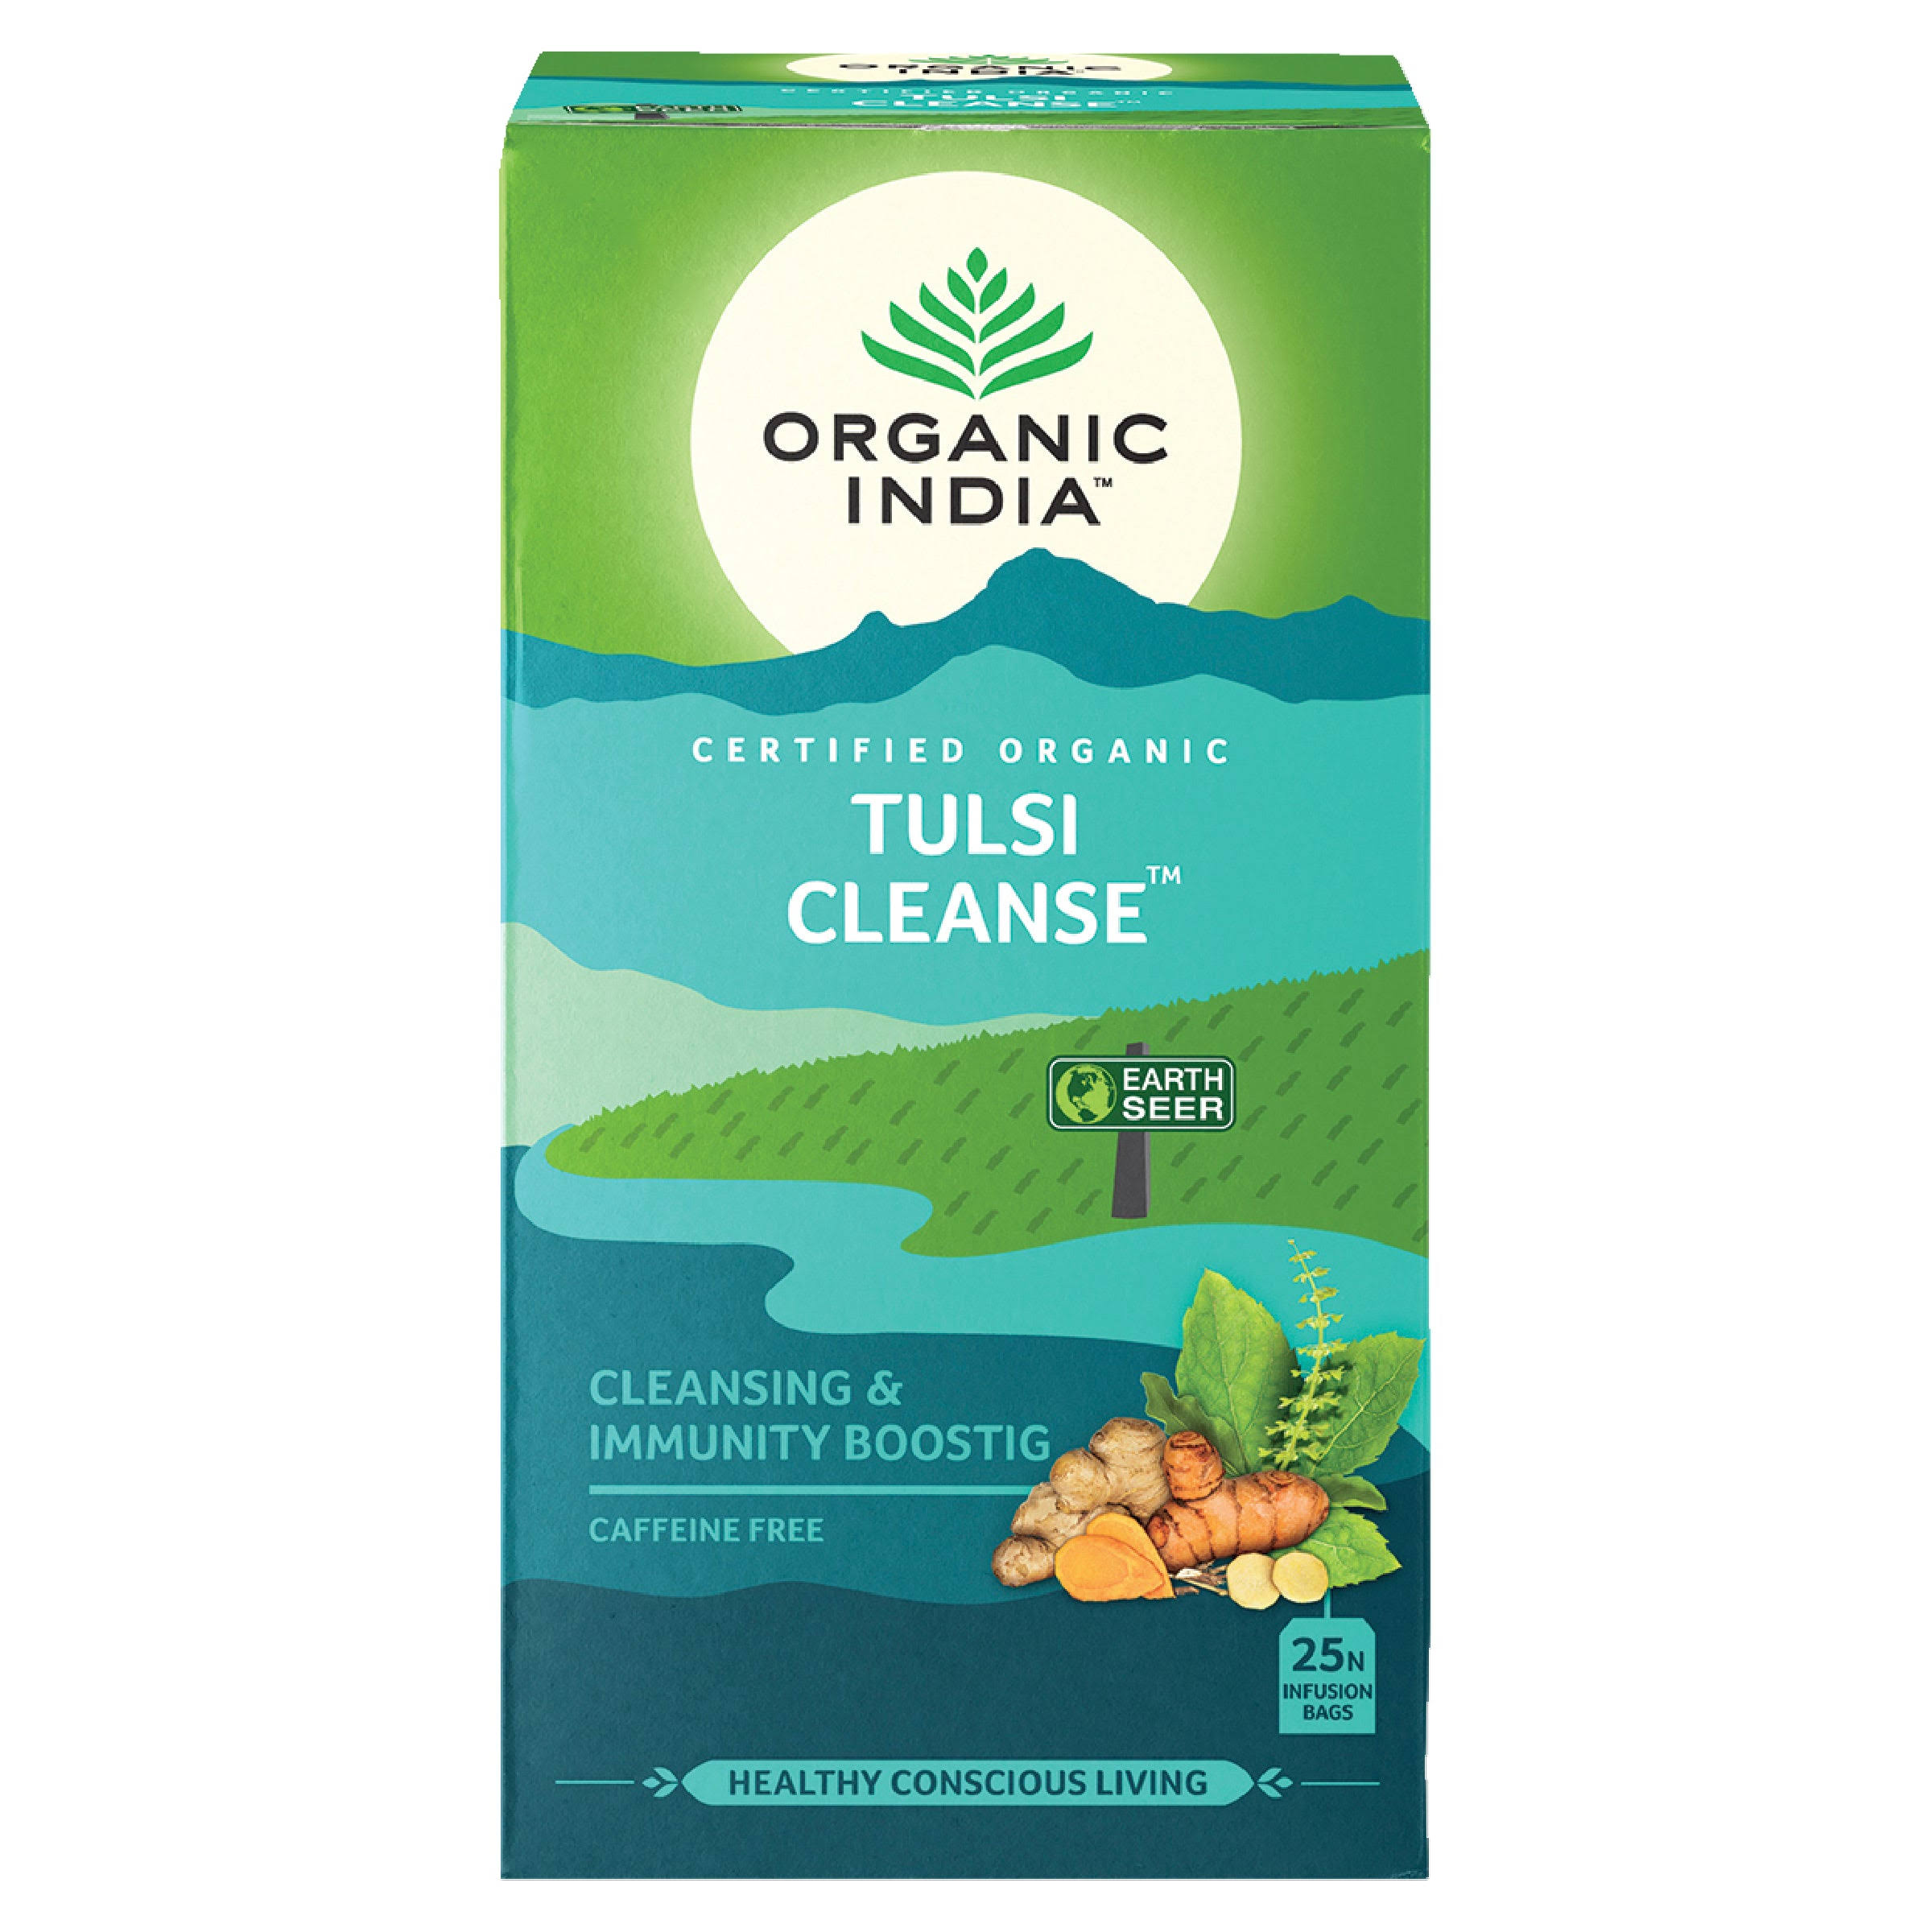 Organic India Tulsi Cleanse Herbal Tea - 18 Tea Bags